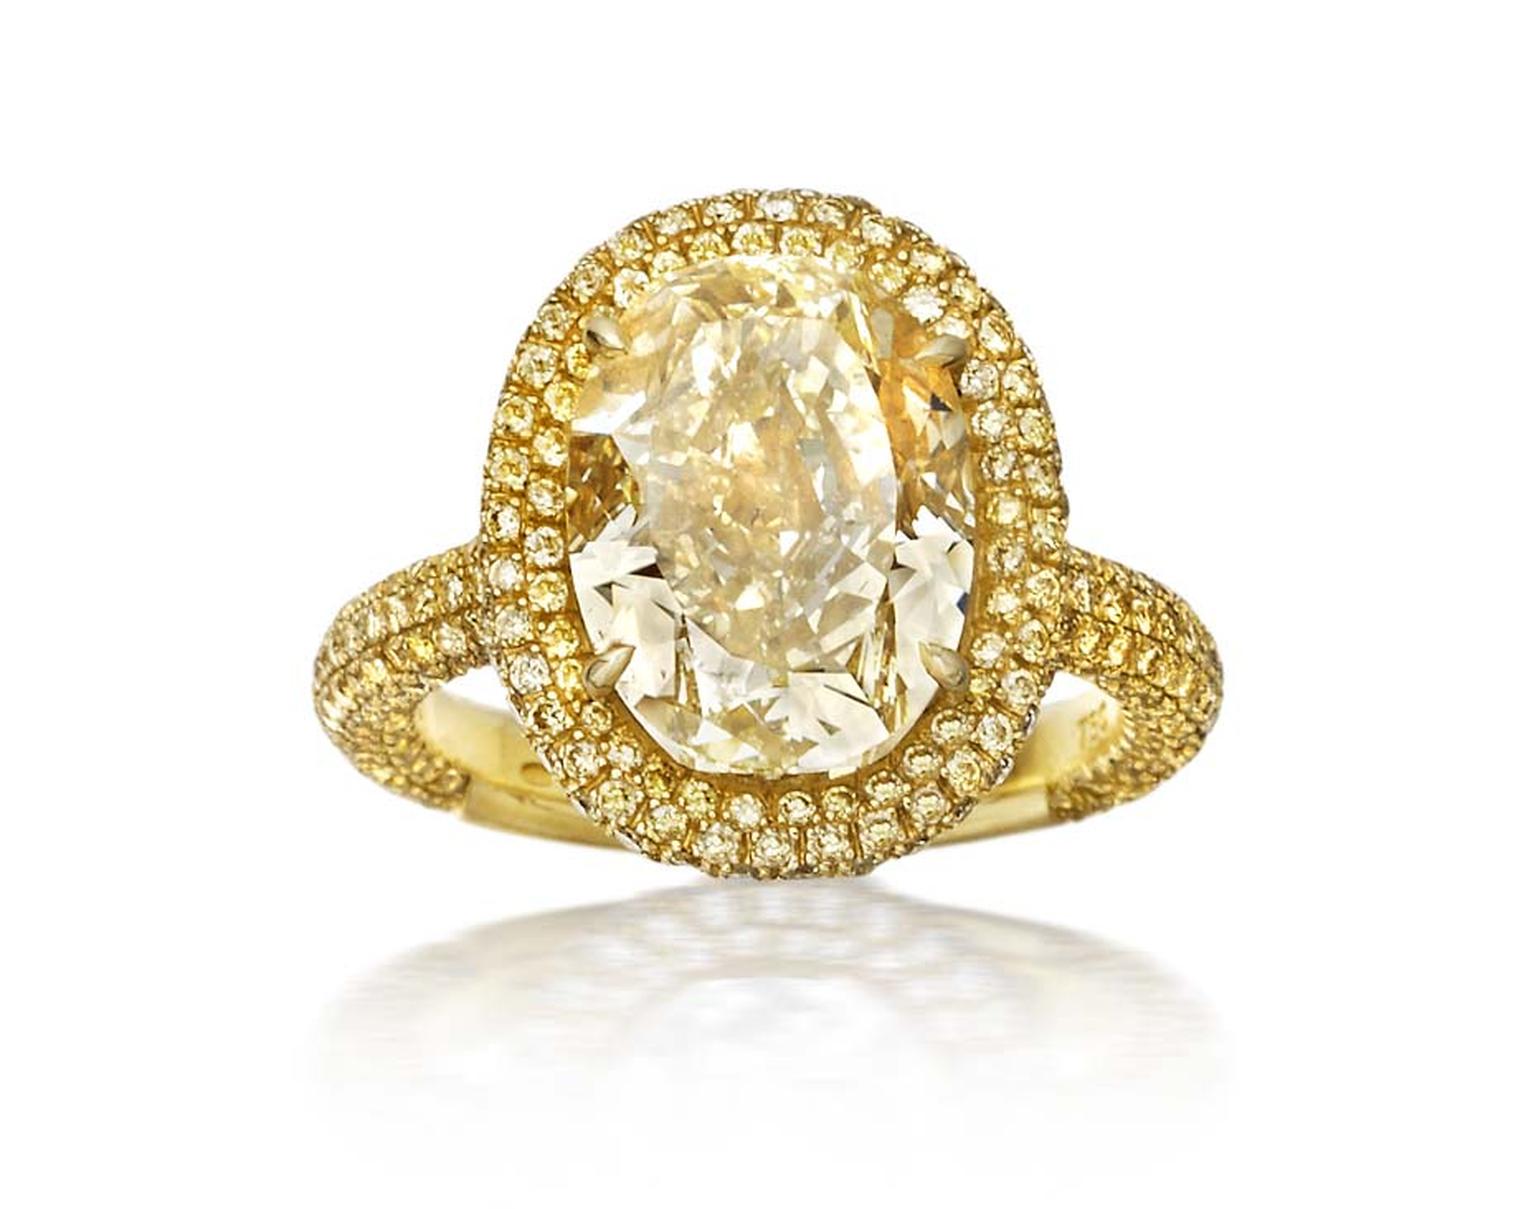 Amrapali yellow diamond engagement ring with a double band of yellow pavé diamonds (£POA).